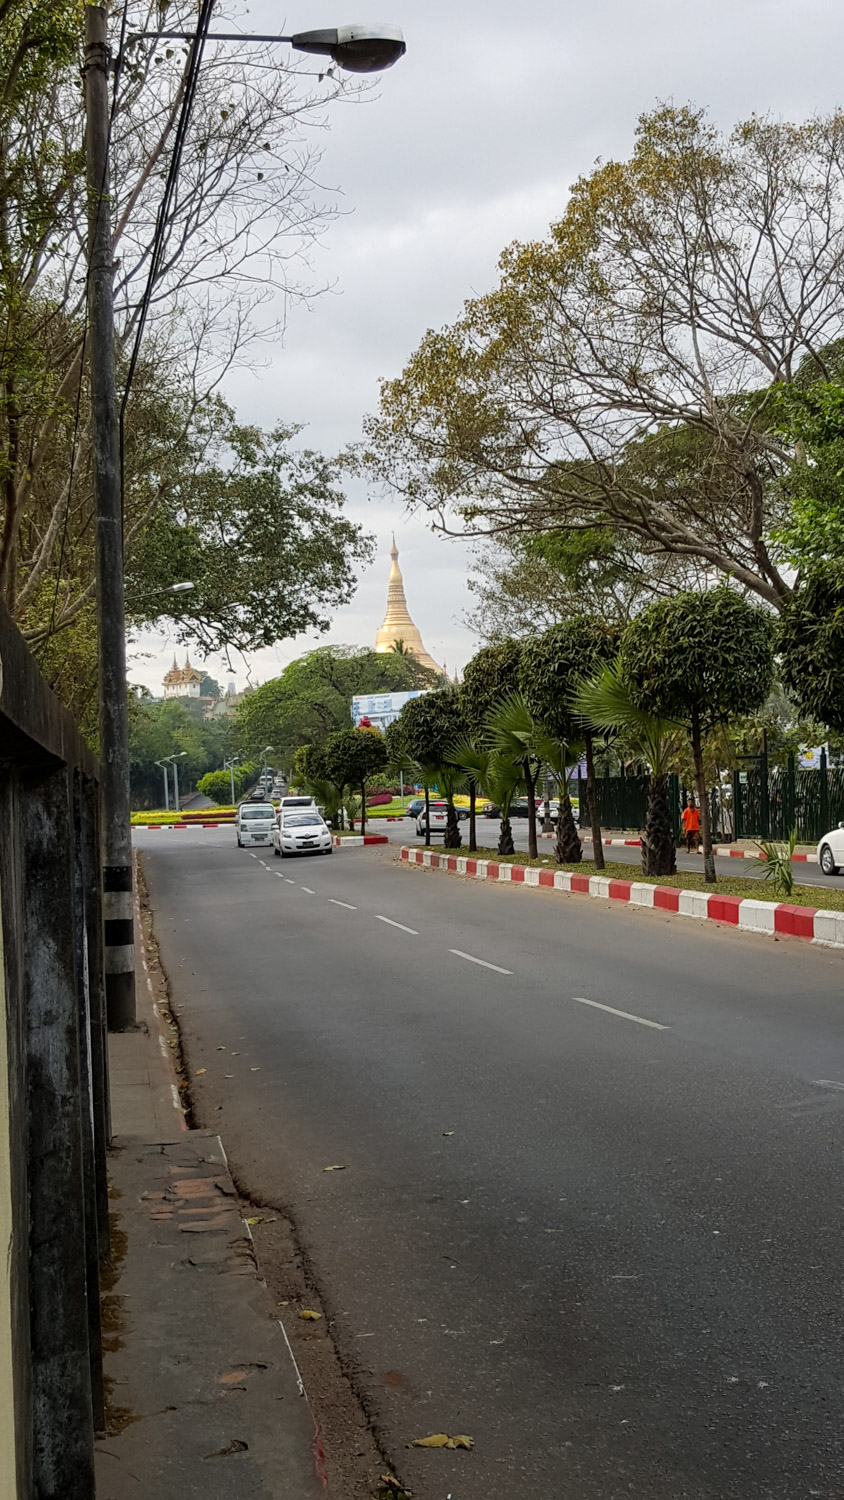 All roads lead to Shwedagon.